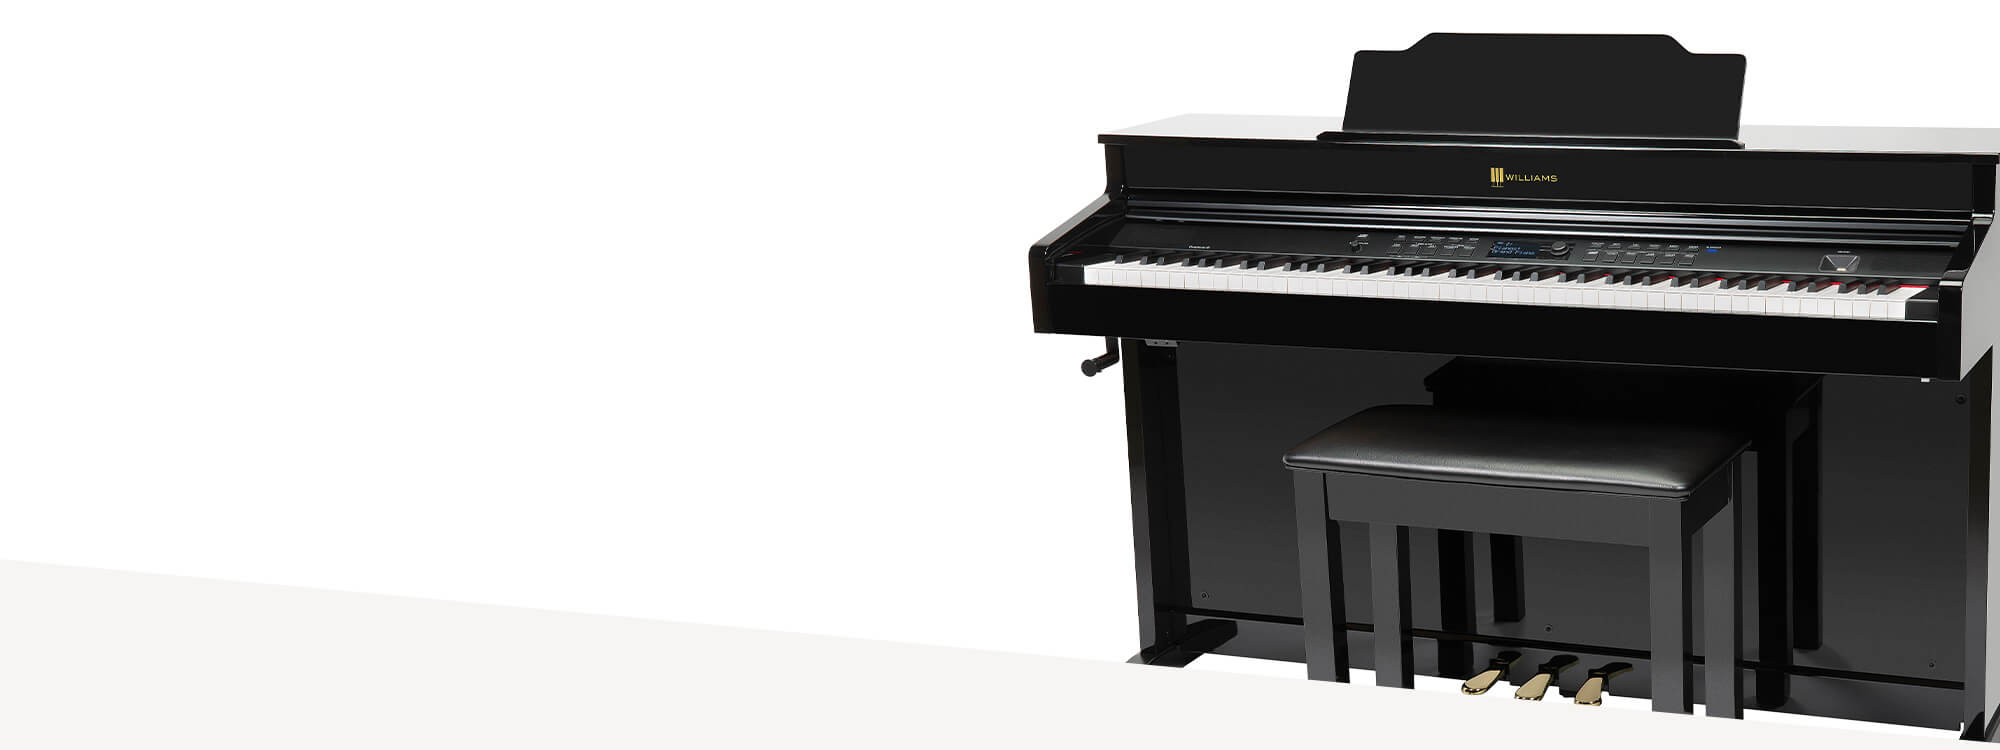 Williams Console Piano Overture III ebony.